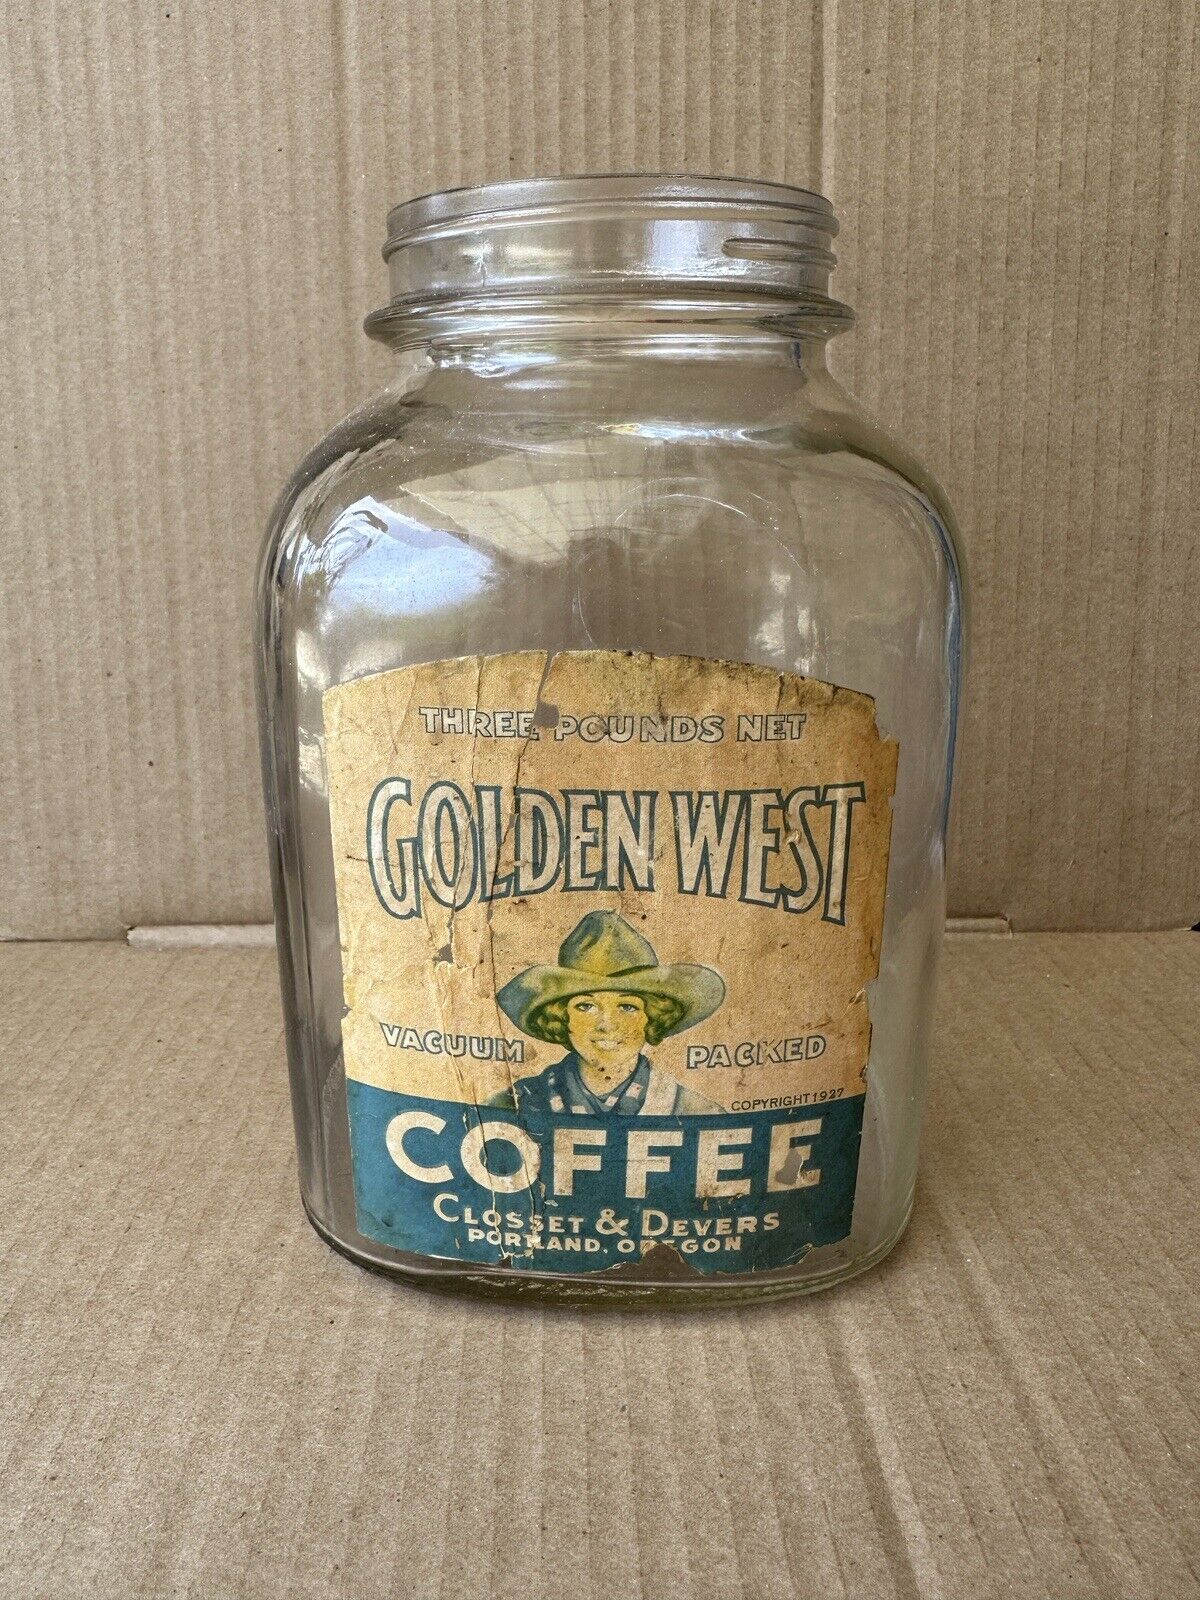 GOLDEN WEST Coffee Glass Storage Jar Closset & Devers Portland OR 1920s vintage